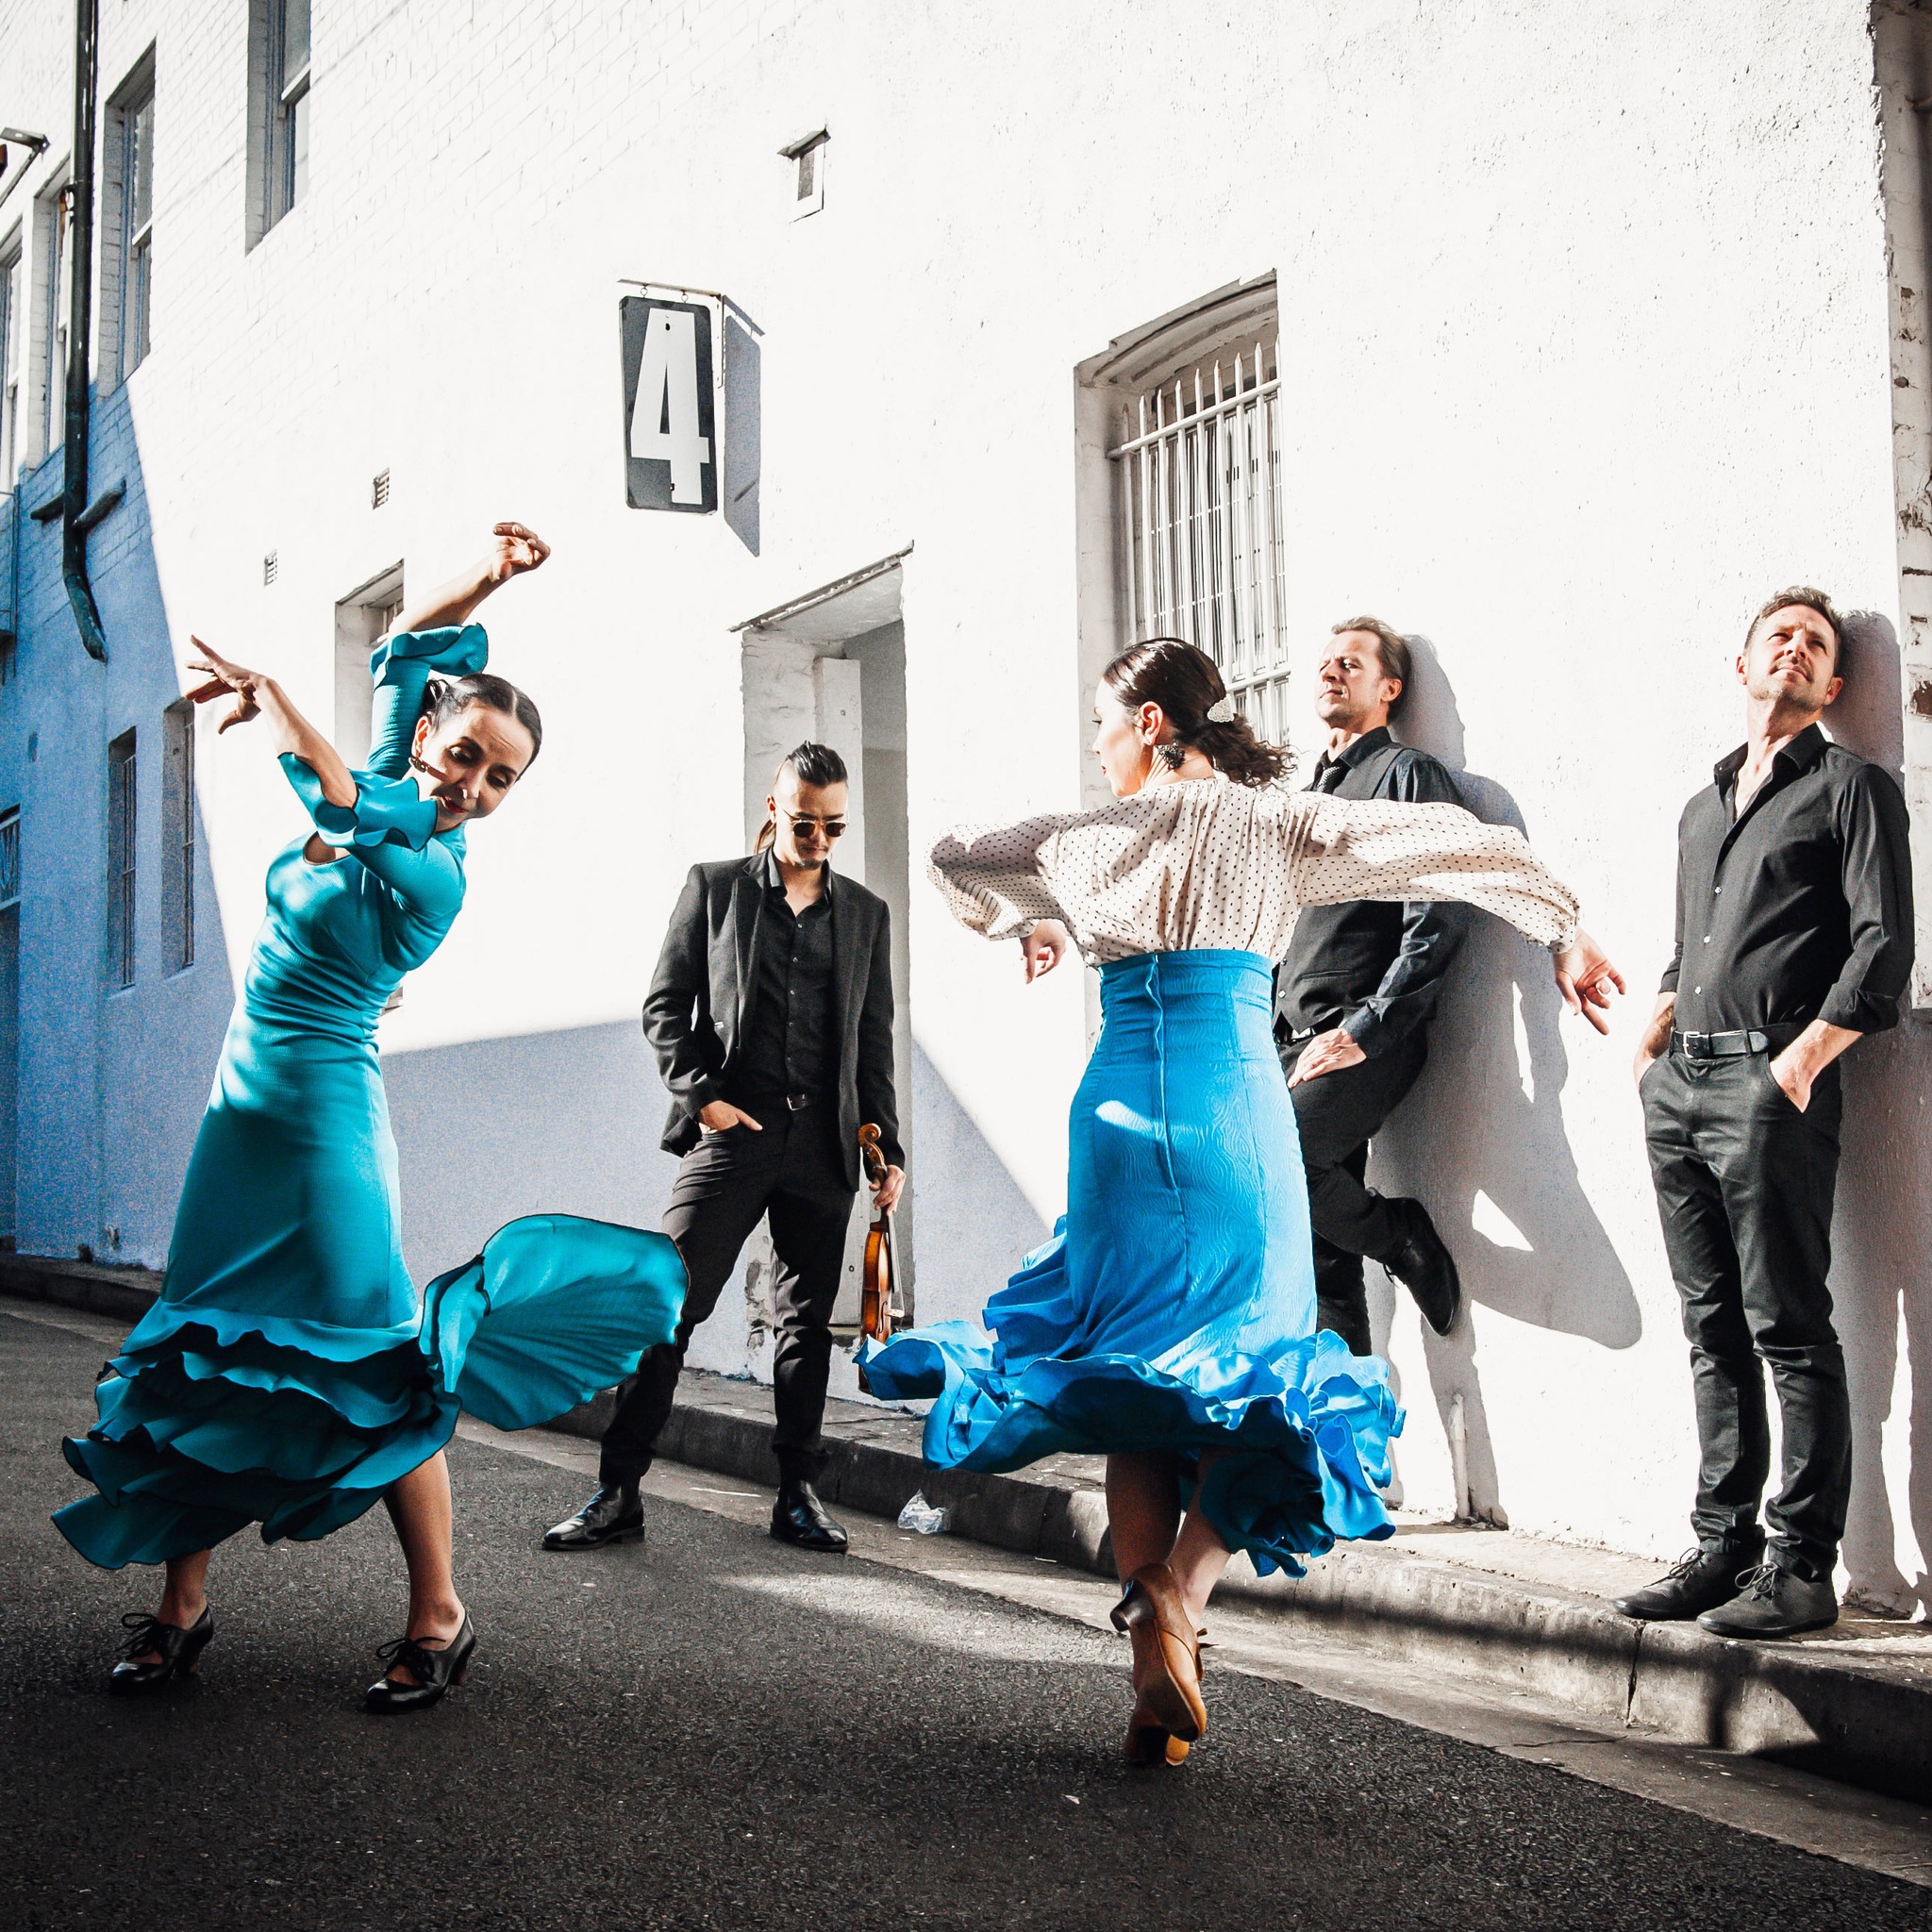 Flamenco performance and workshop to be held in Gunnedah